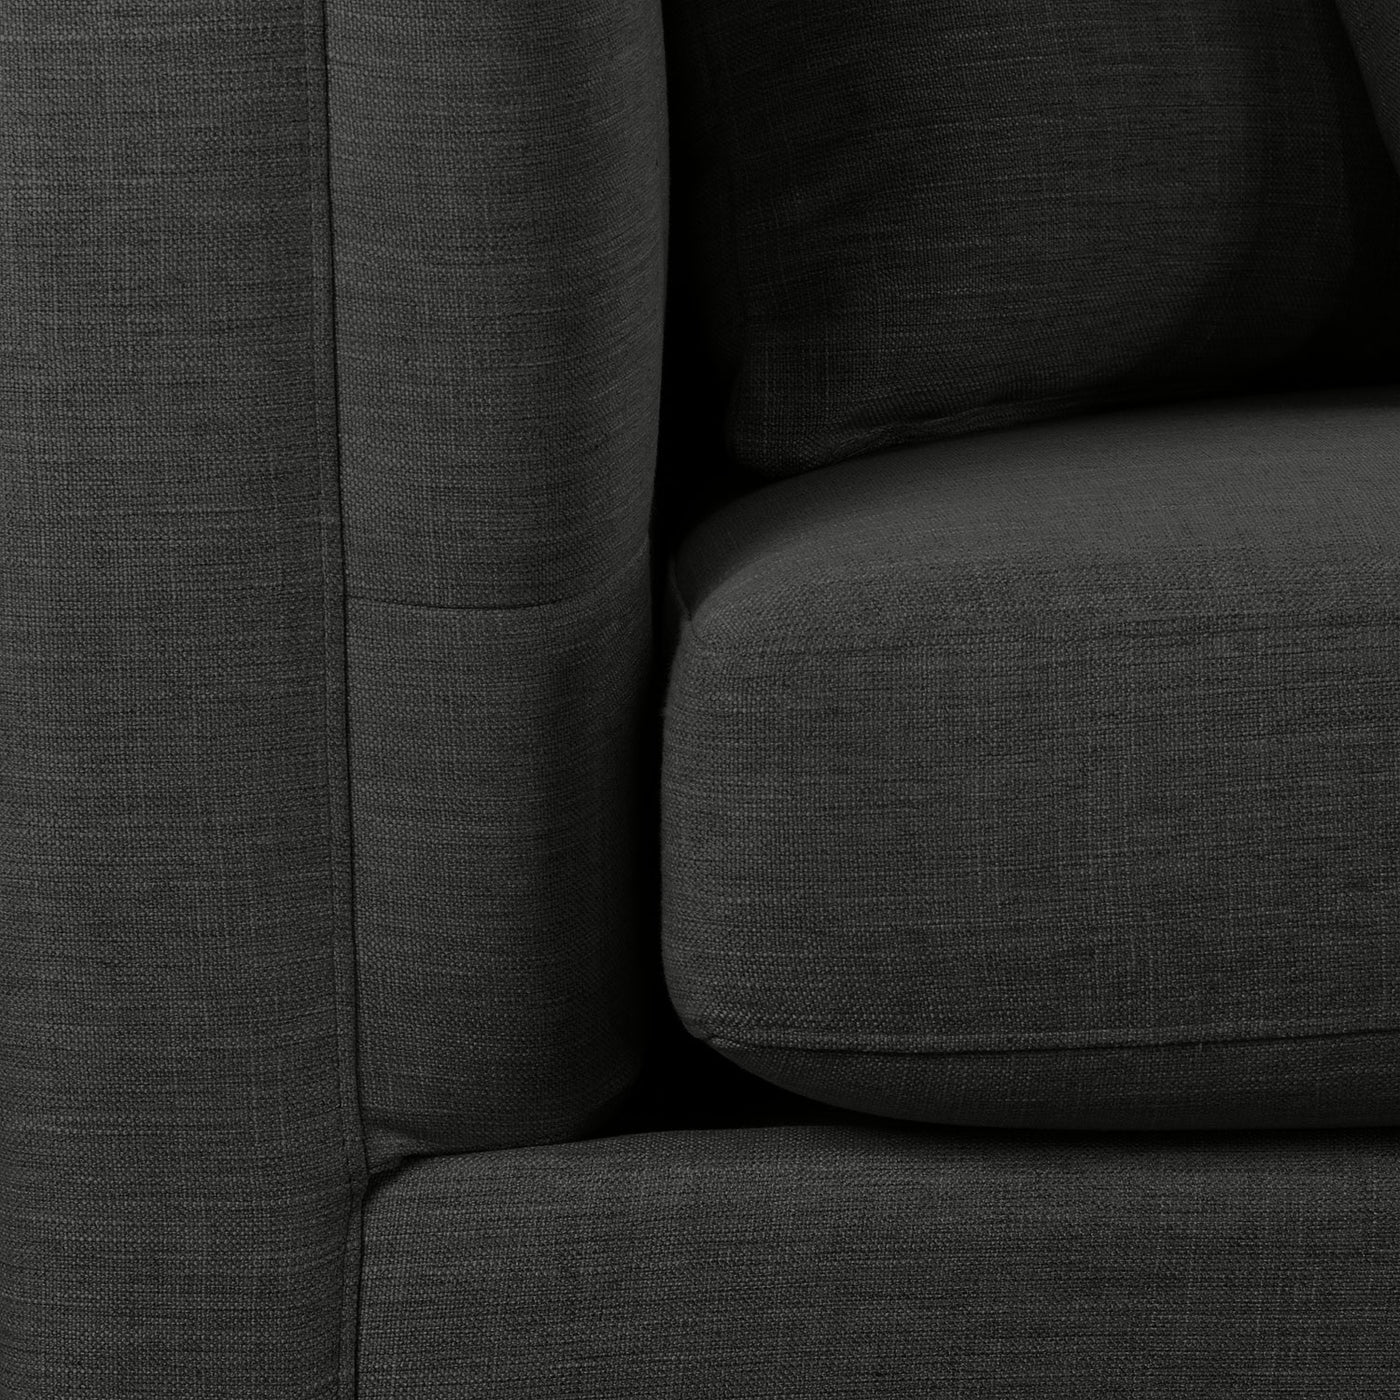 Astin Sofa and Chair and a Half Set - Dark Grey